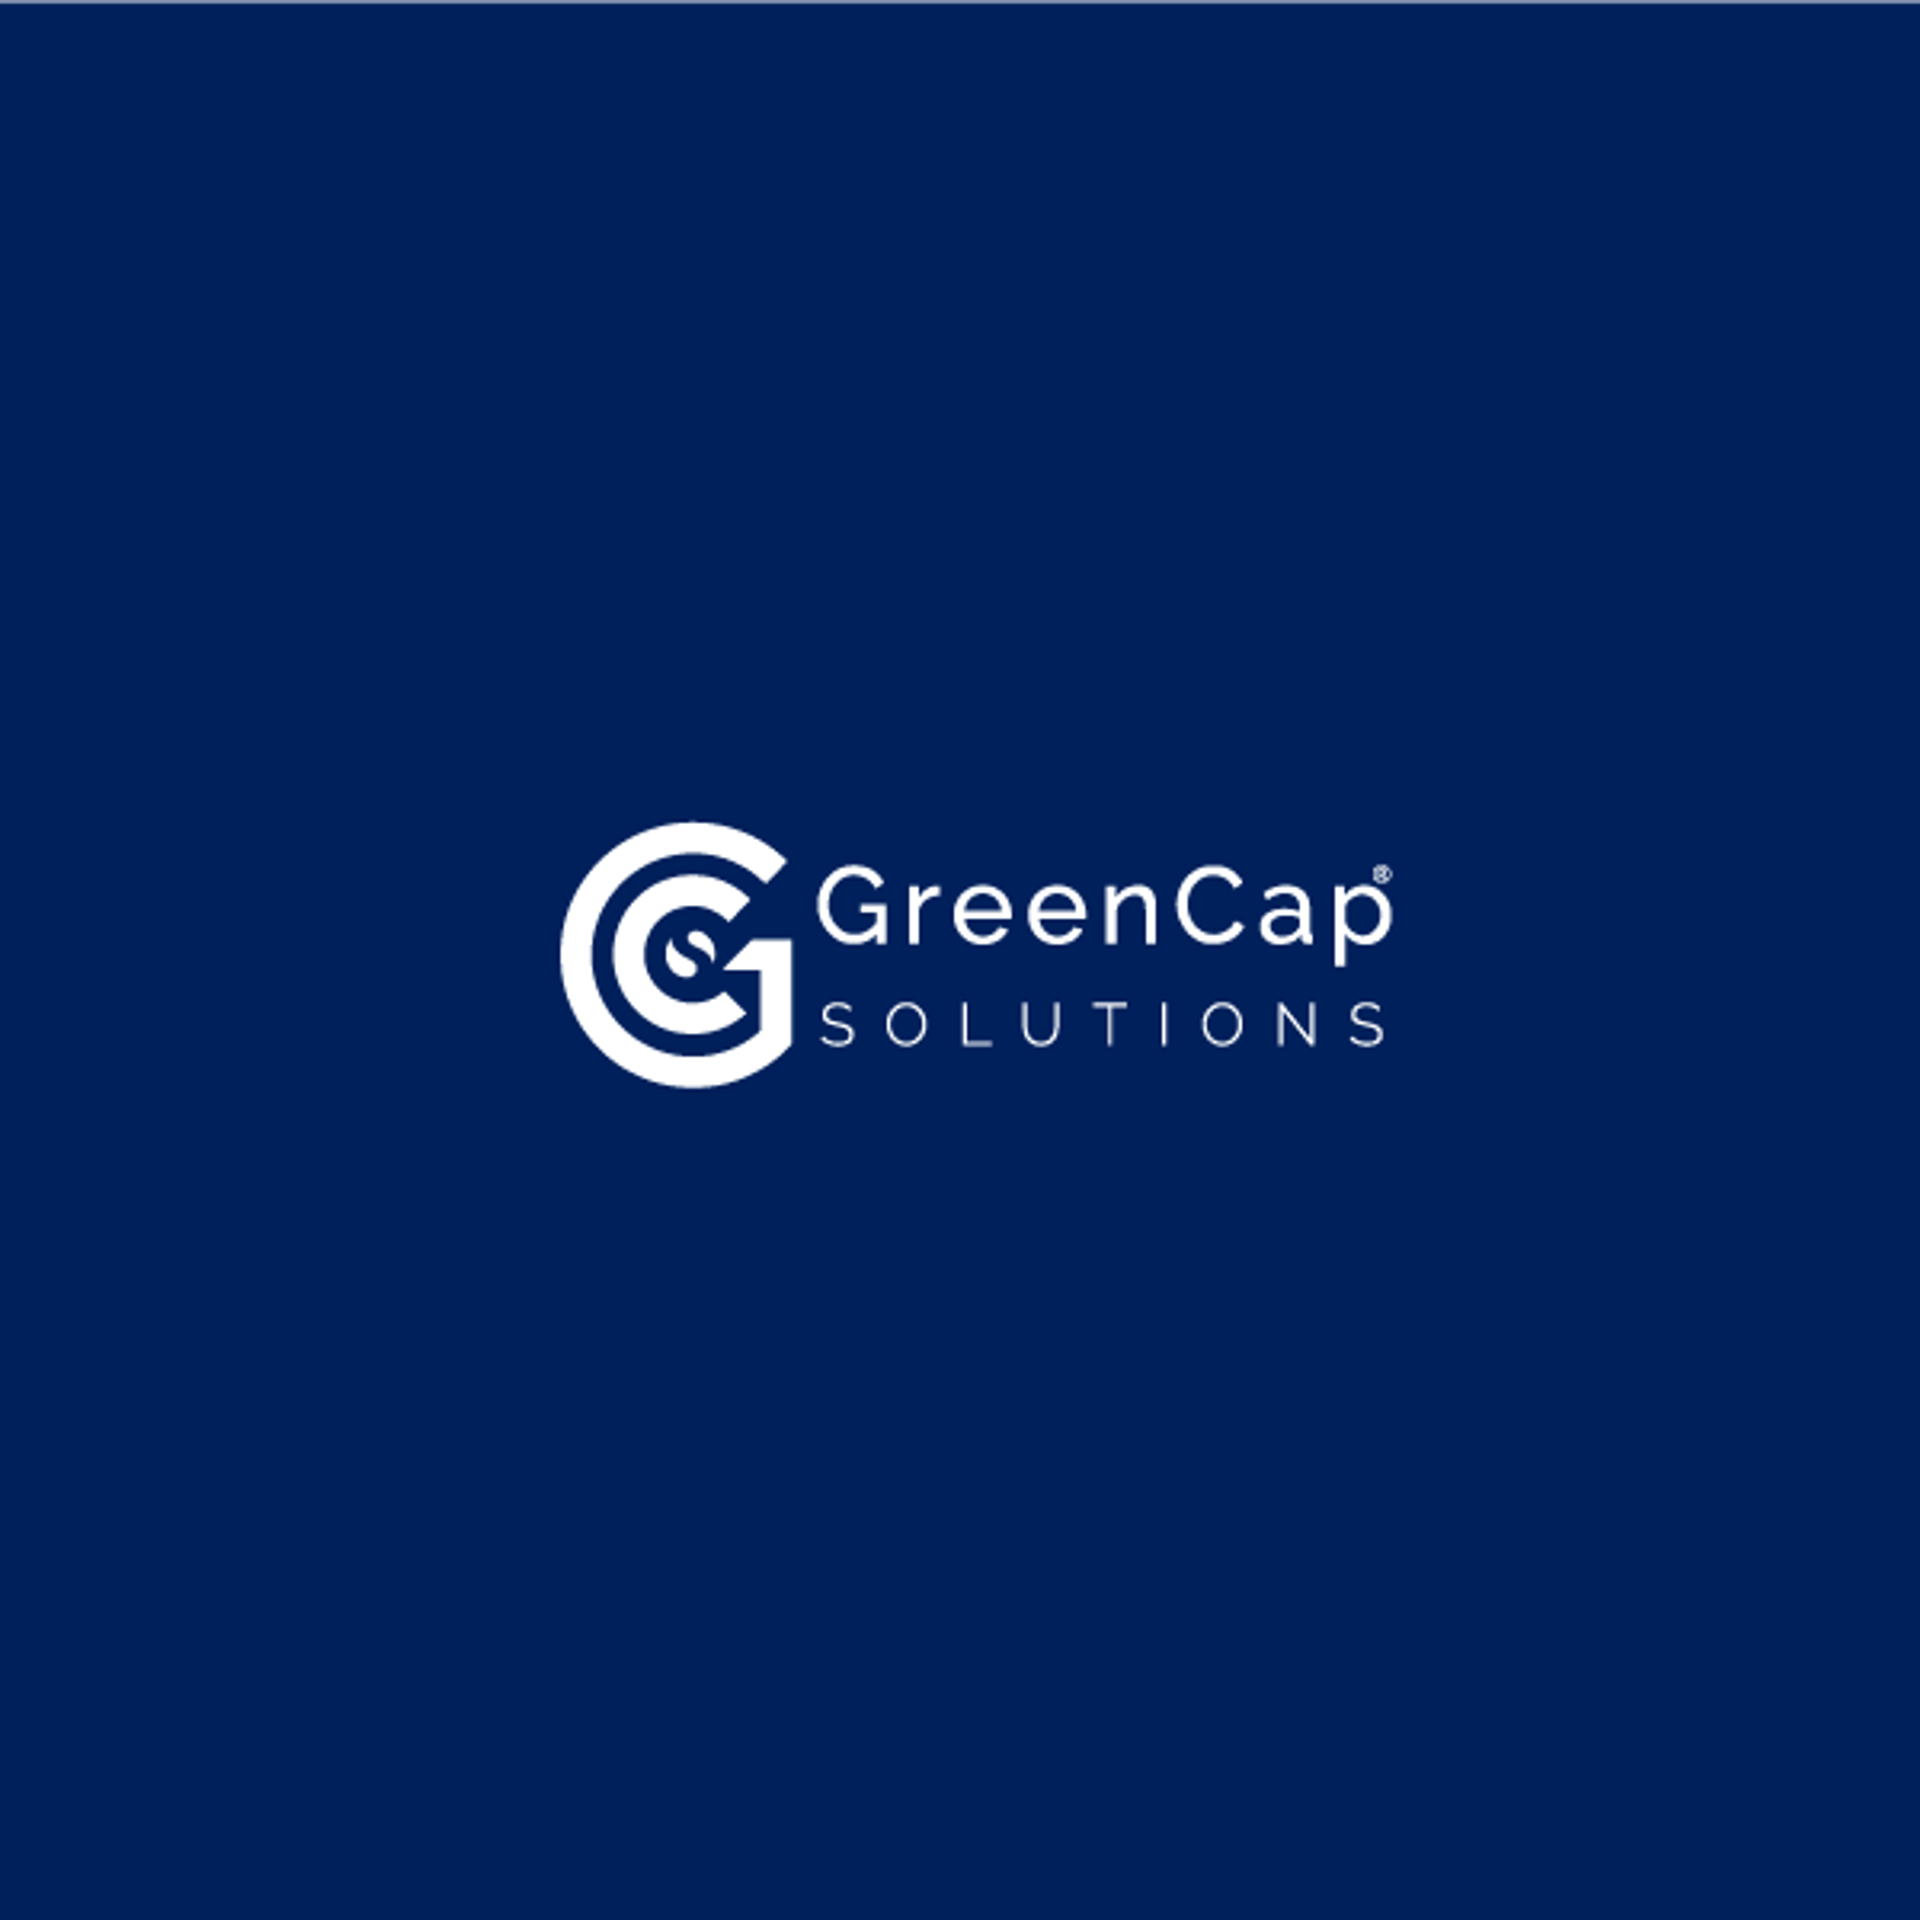 Greencap solutions logo